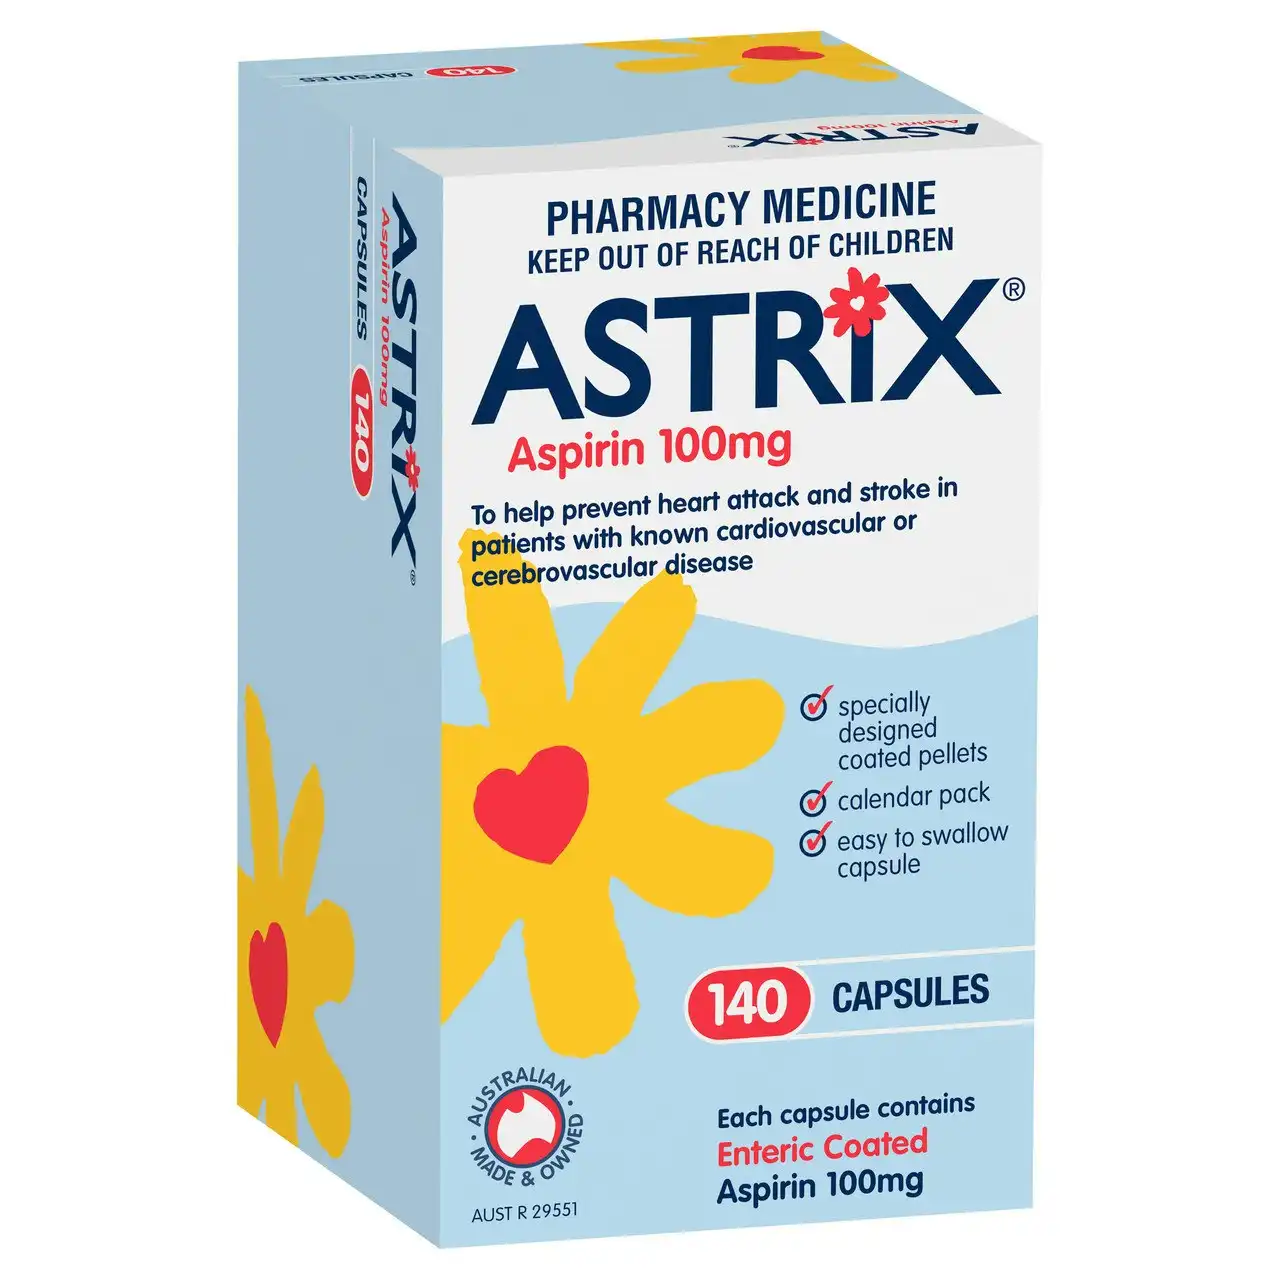 Astrix Aspirin 100mg 140 Capsules